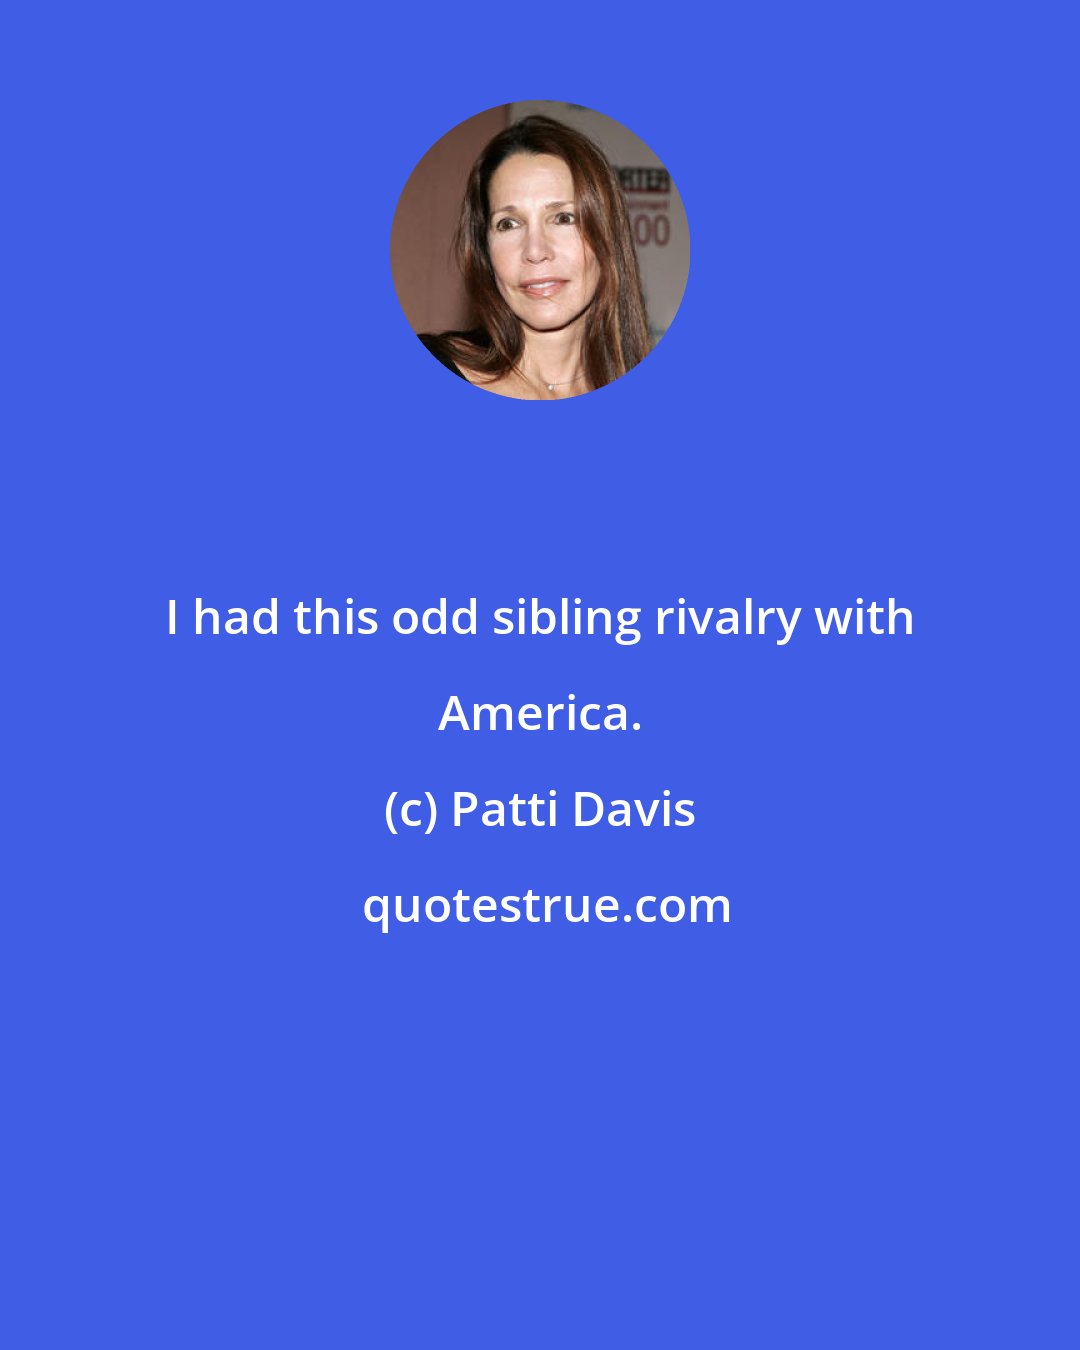 Patti Davis: I had this odd sibling rivalry with America.